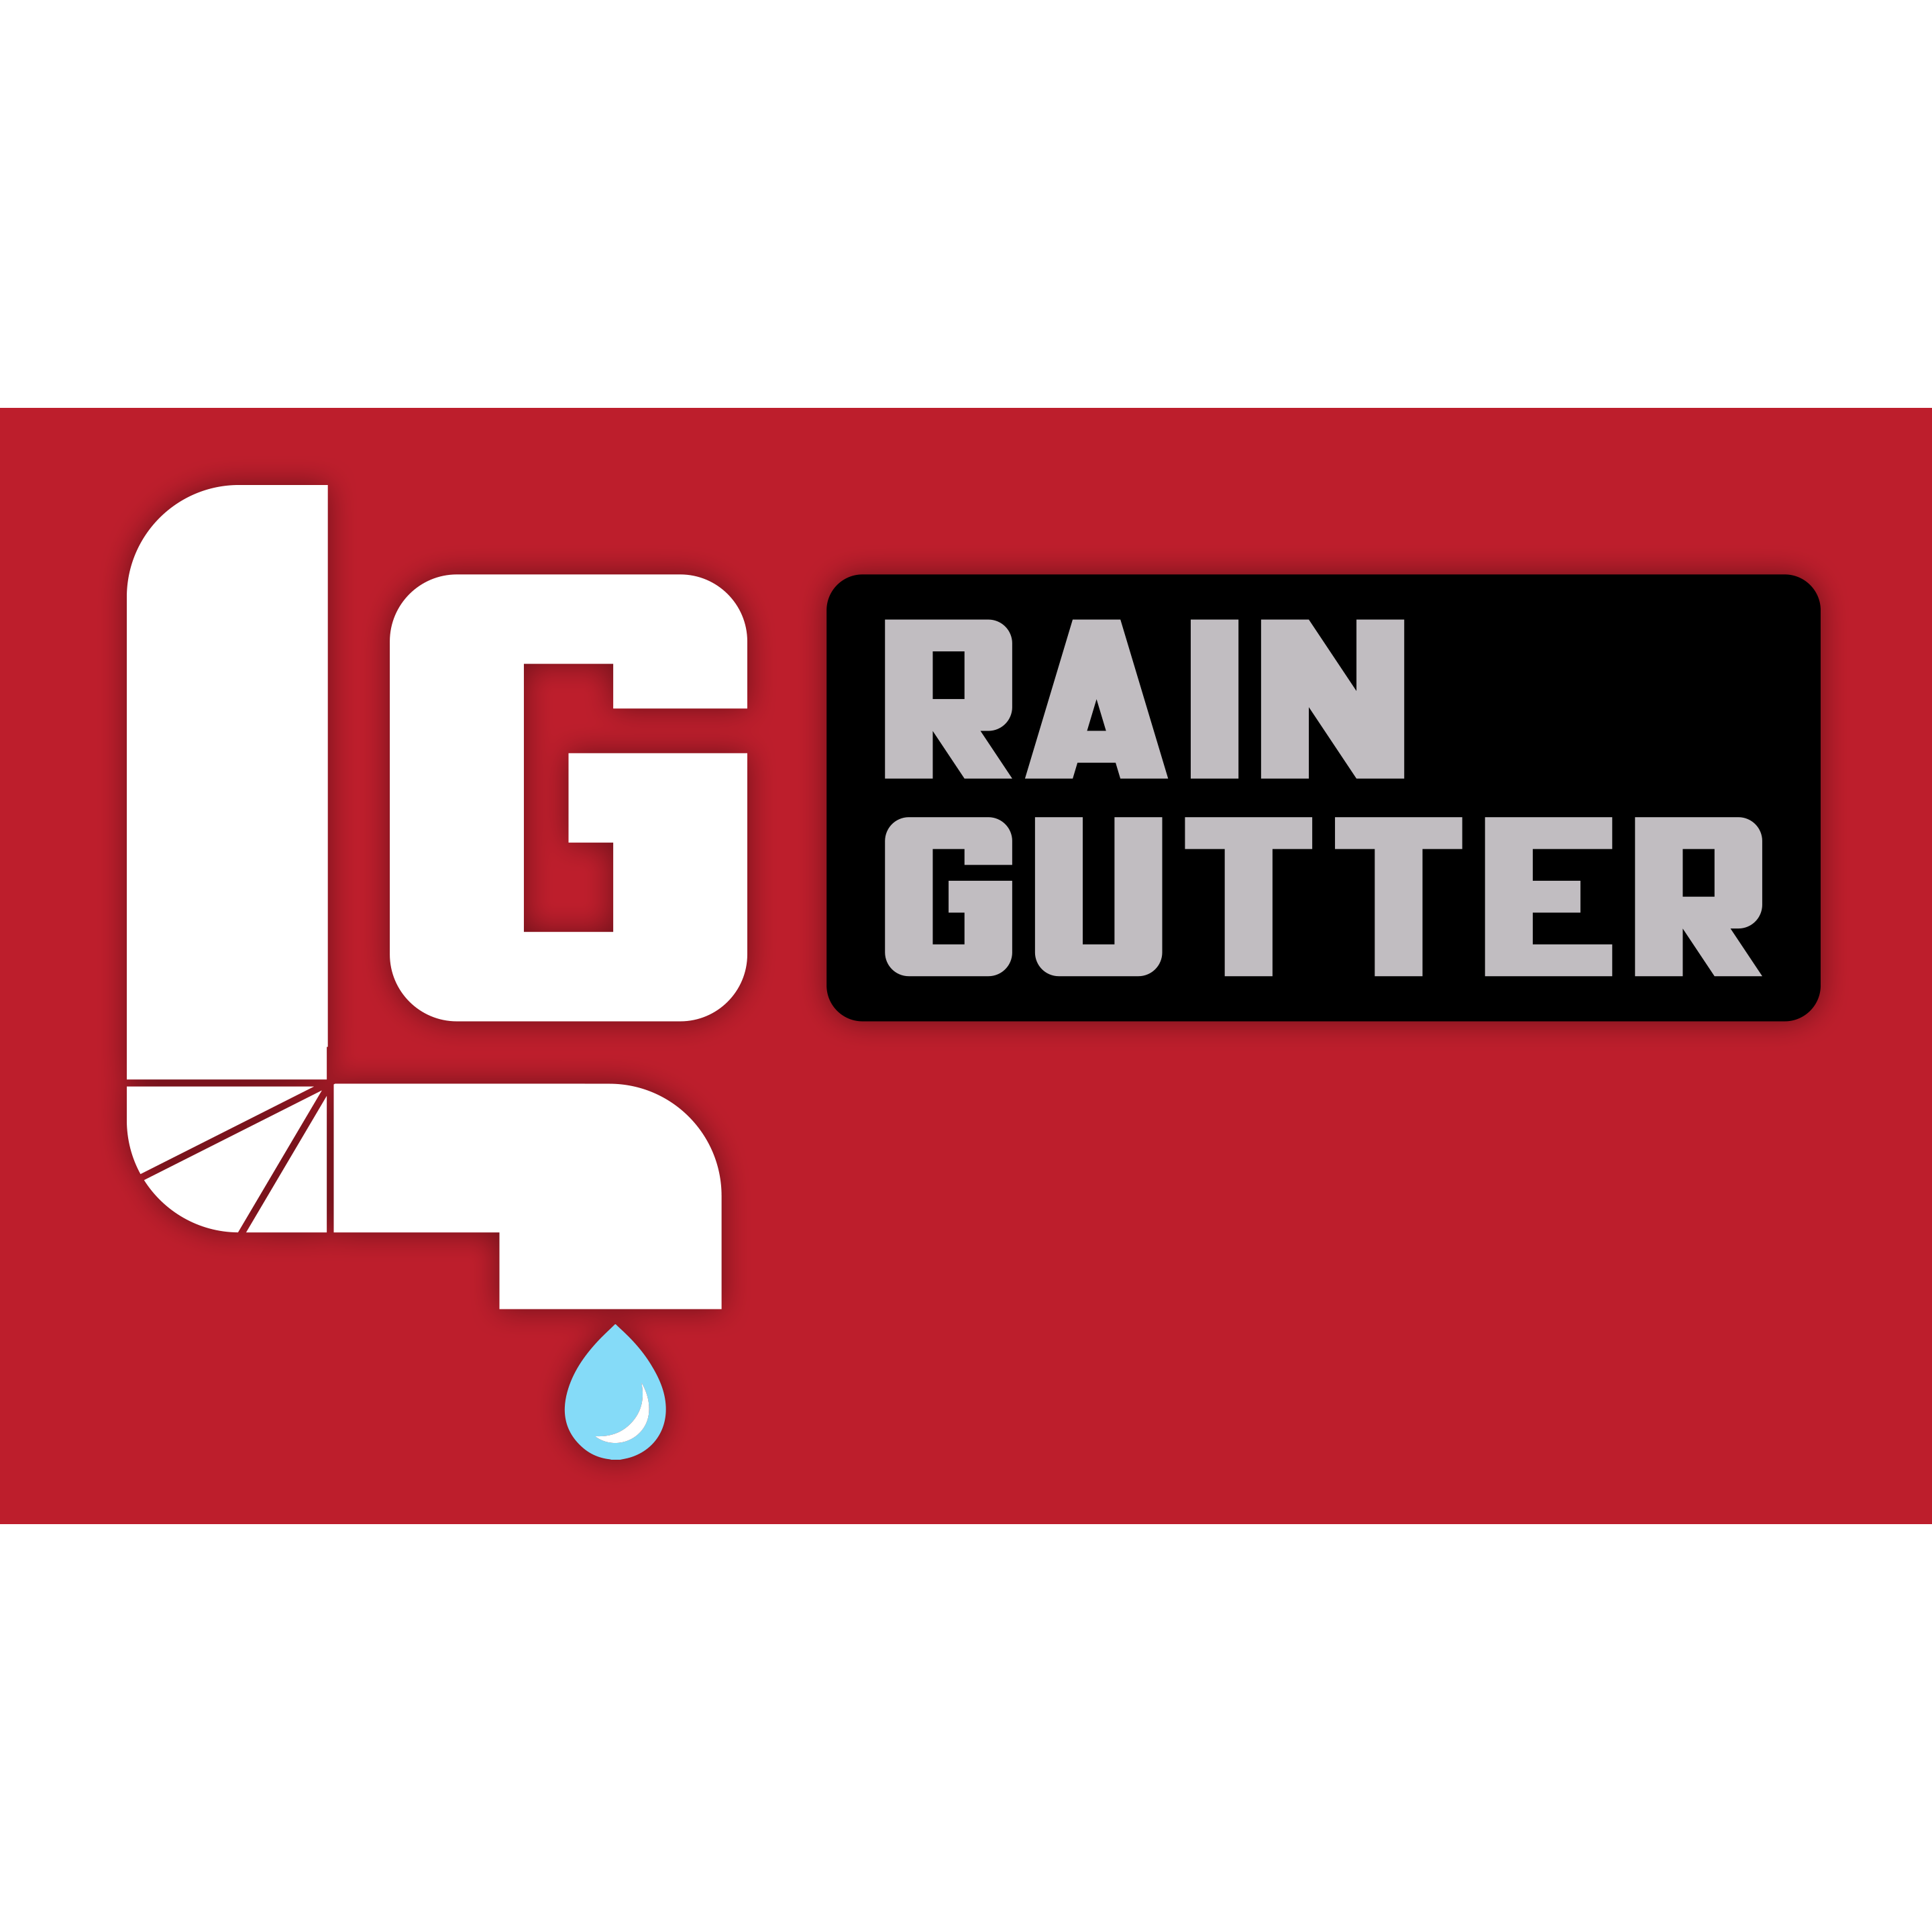 LG Rain Gutter